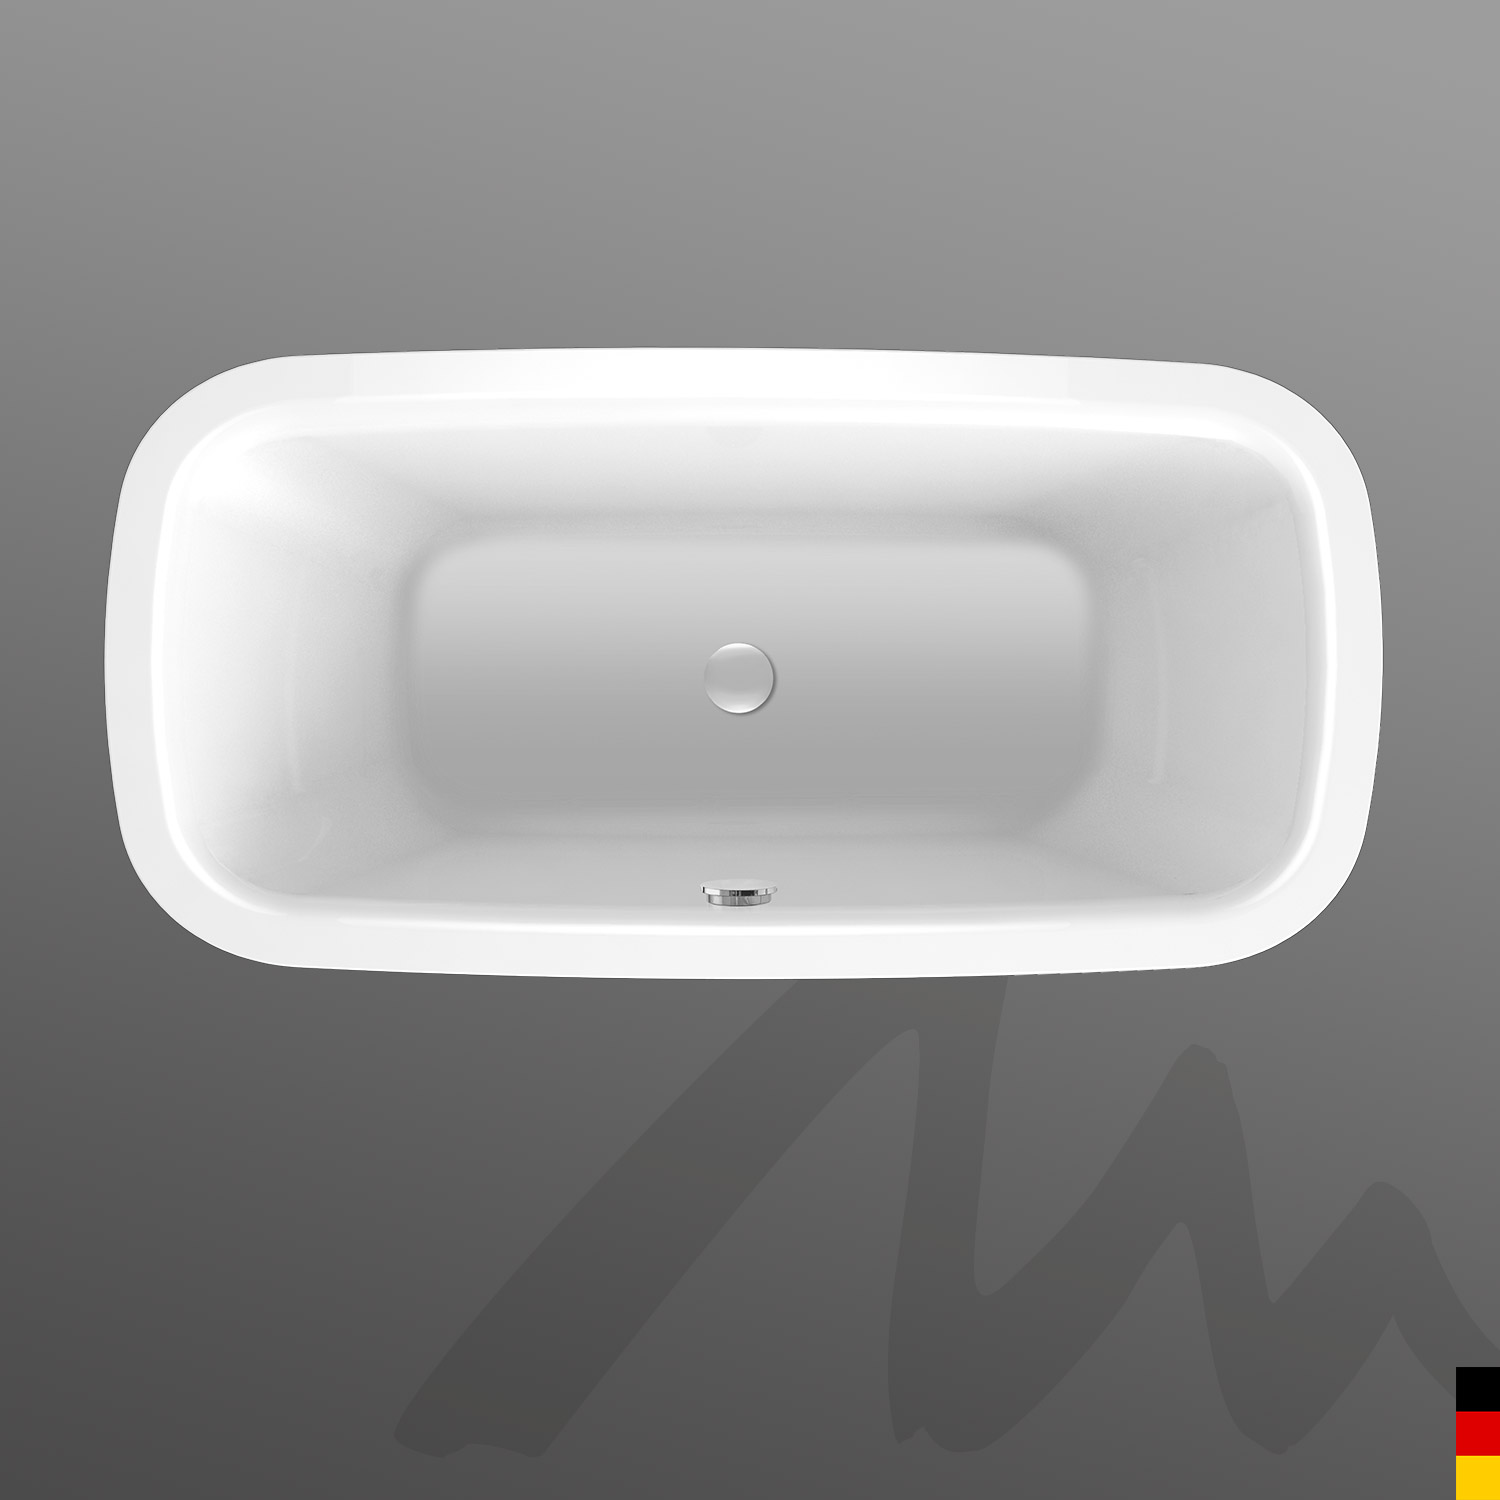 Mauersberger Badewanne Oval Nivalis Oval 180/90 duo  180x90x43cm  Farbe:weiß